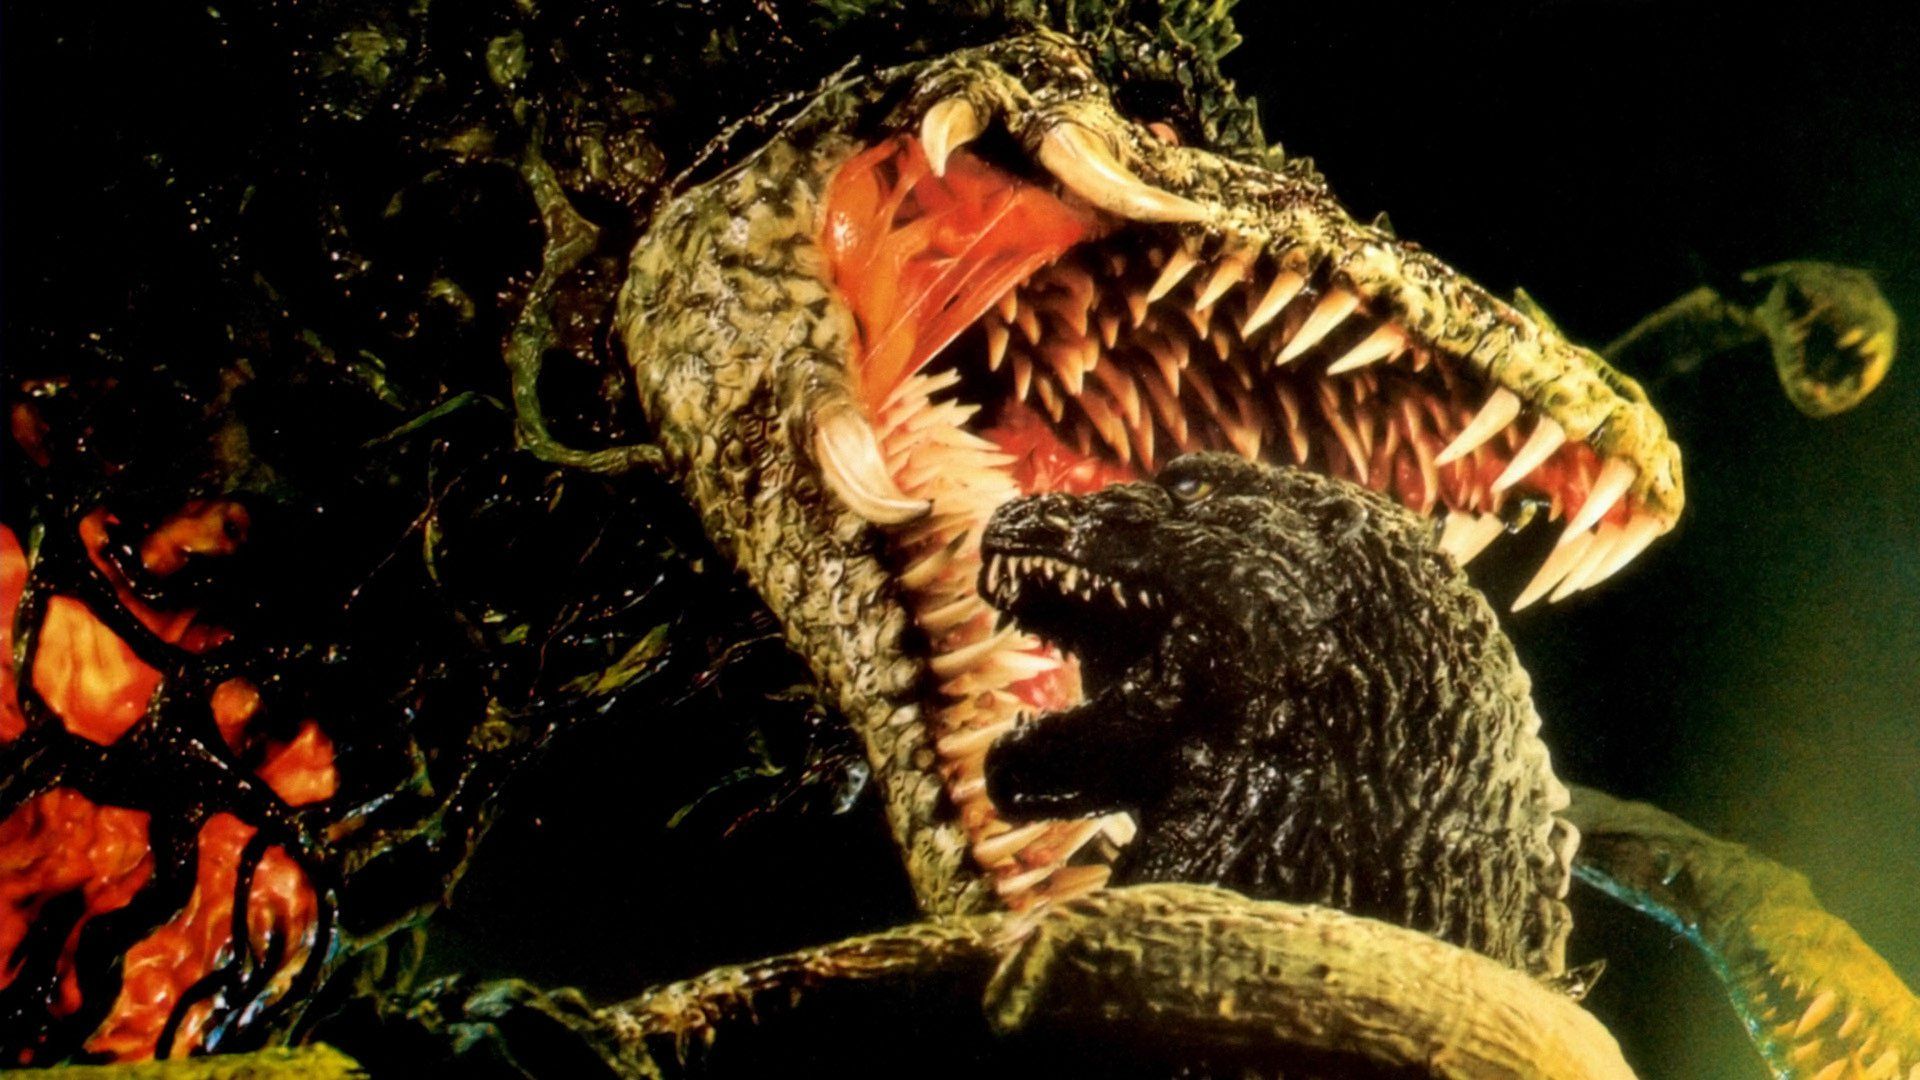 Godzilla vs. Biollante Backdrop